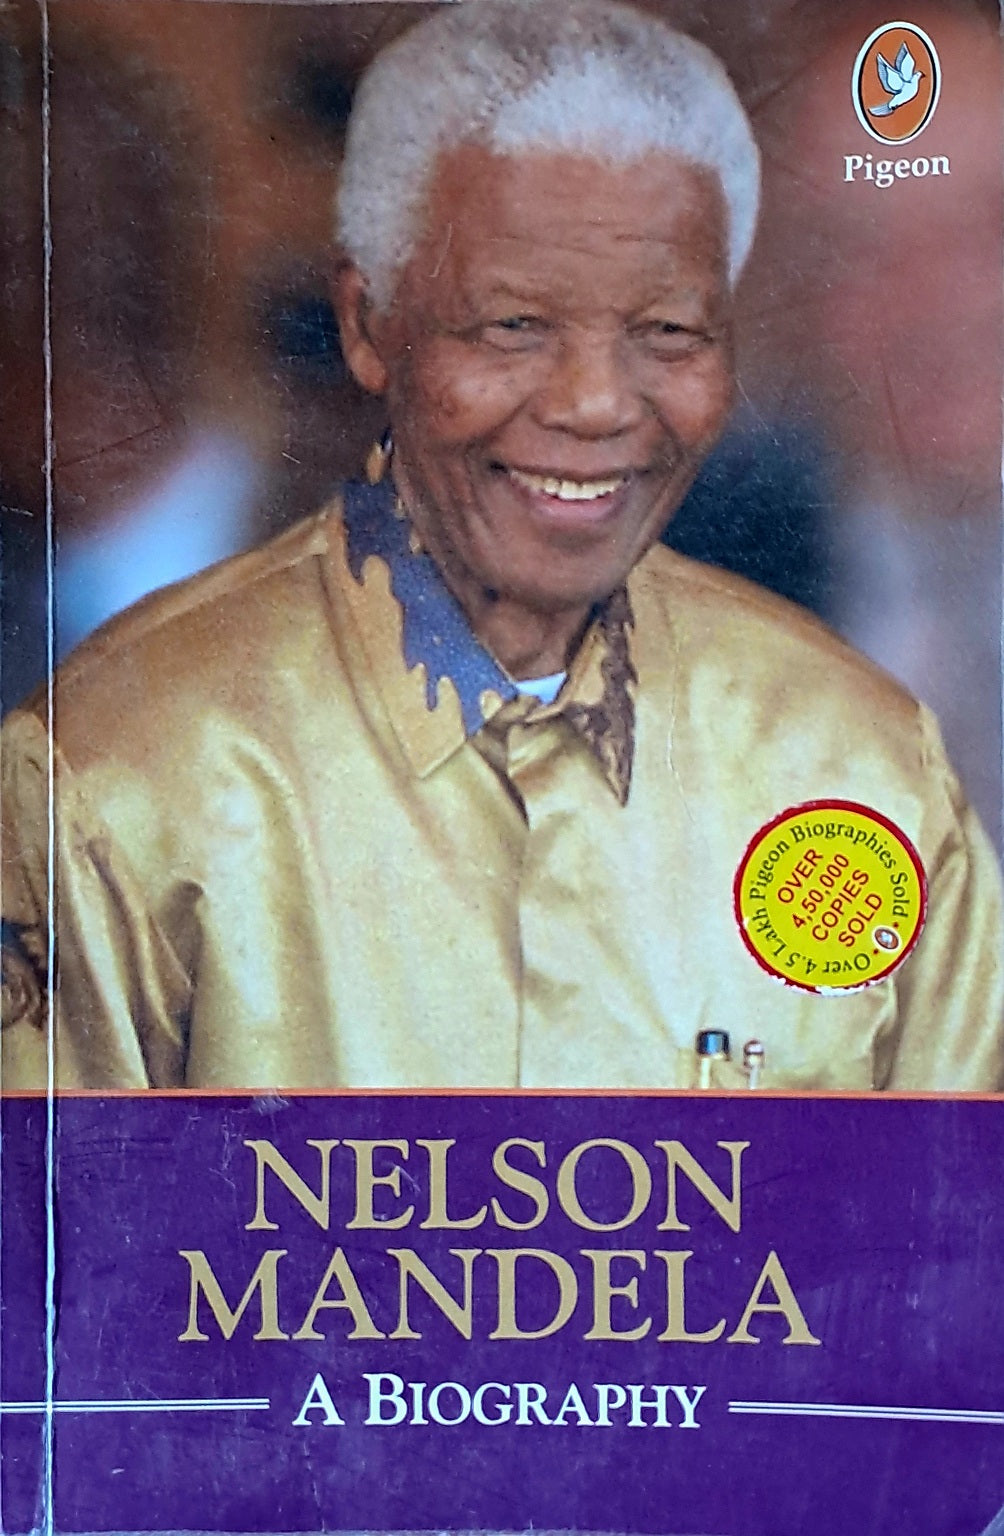 NELSON MANDELA(A Biography)